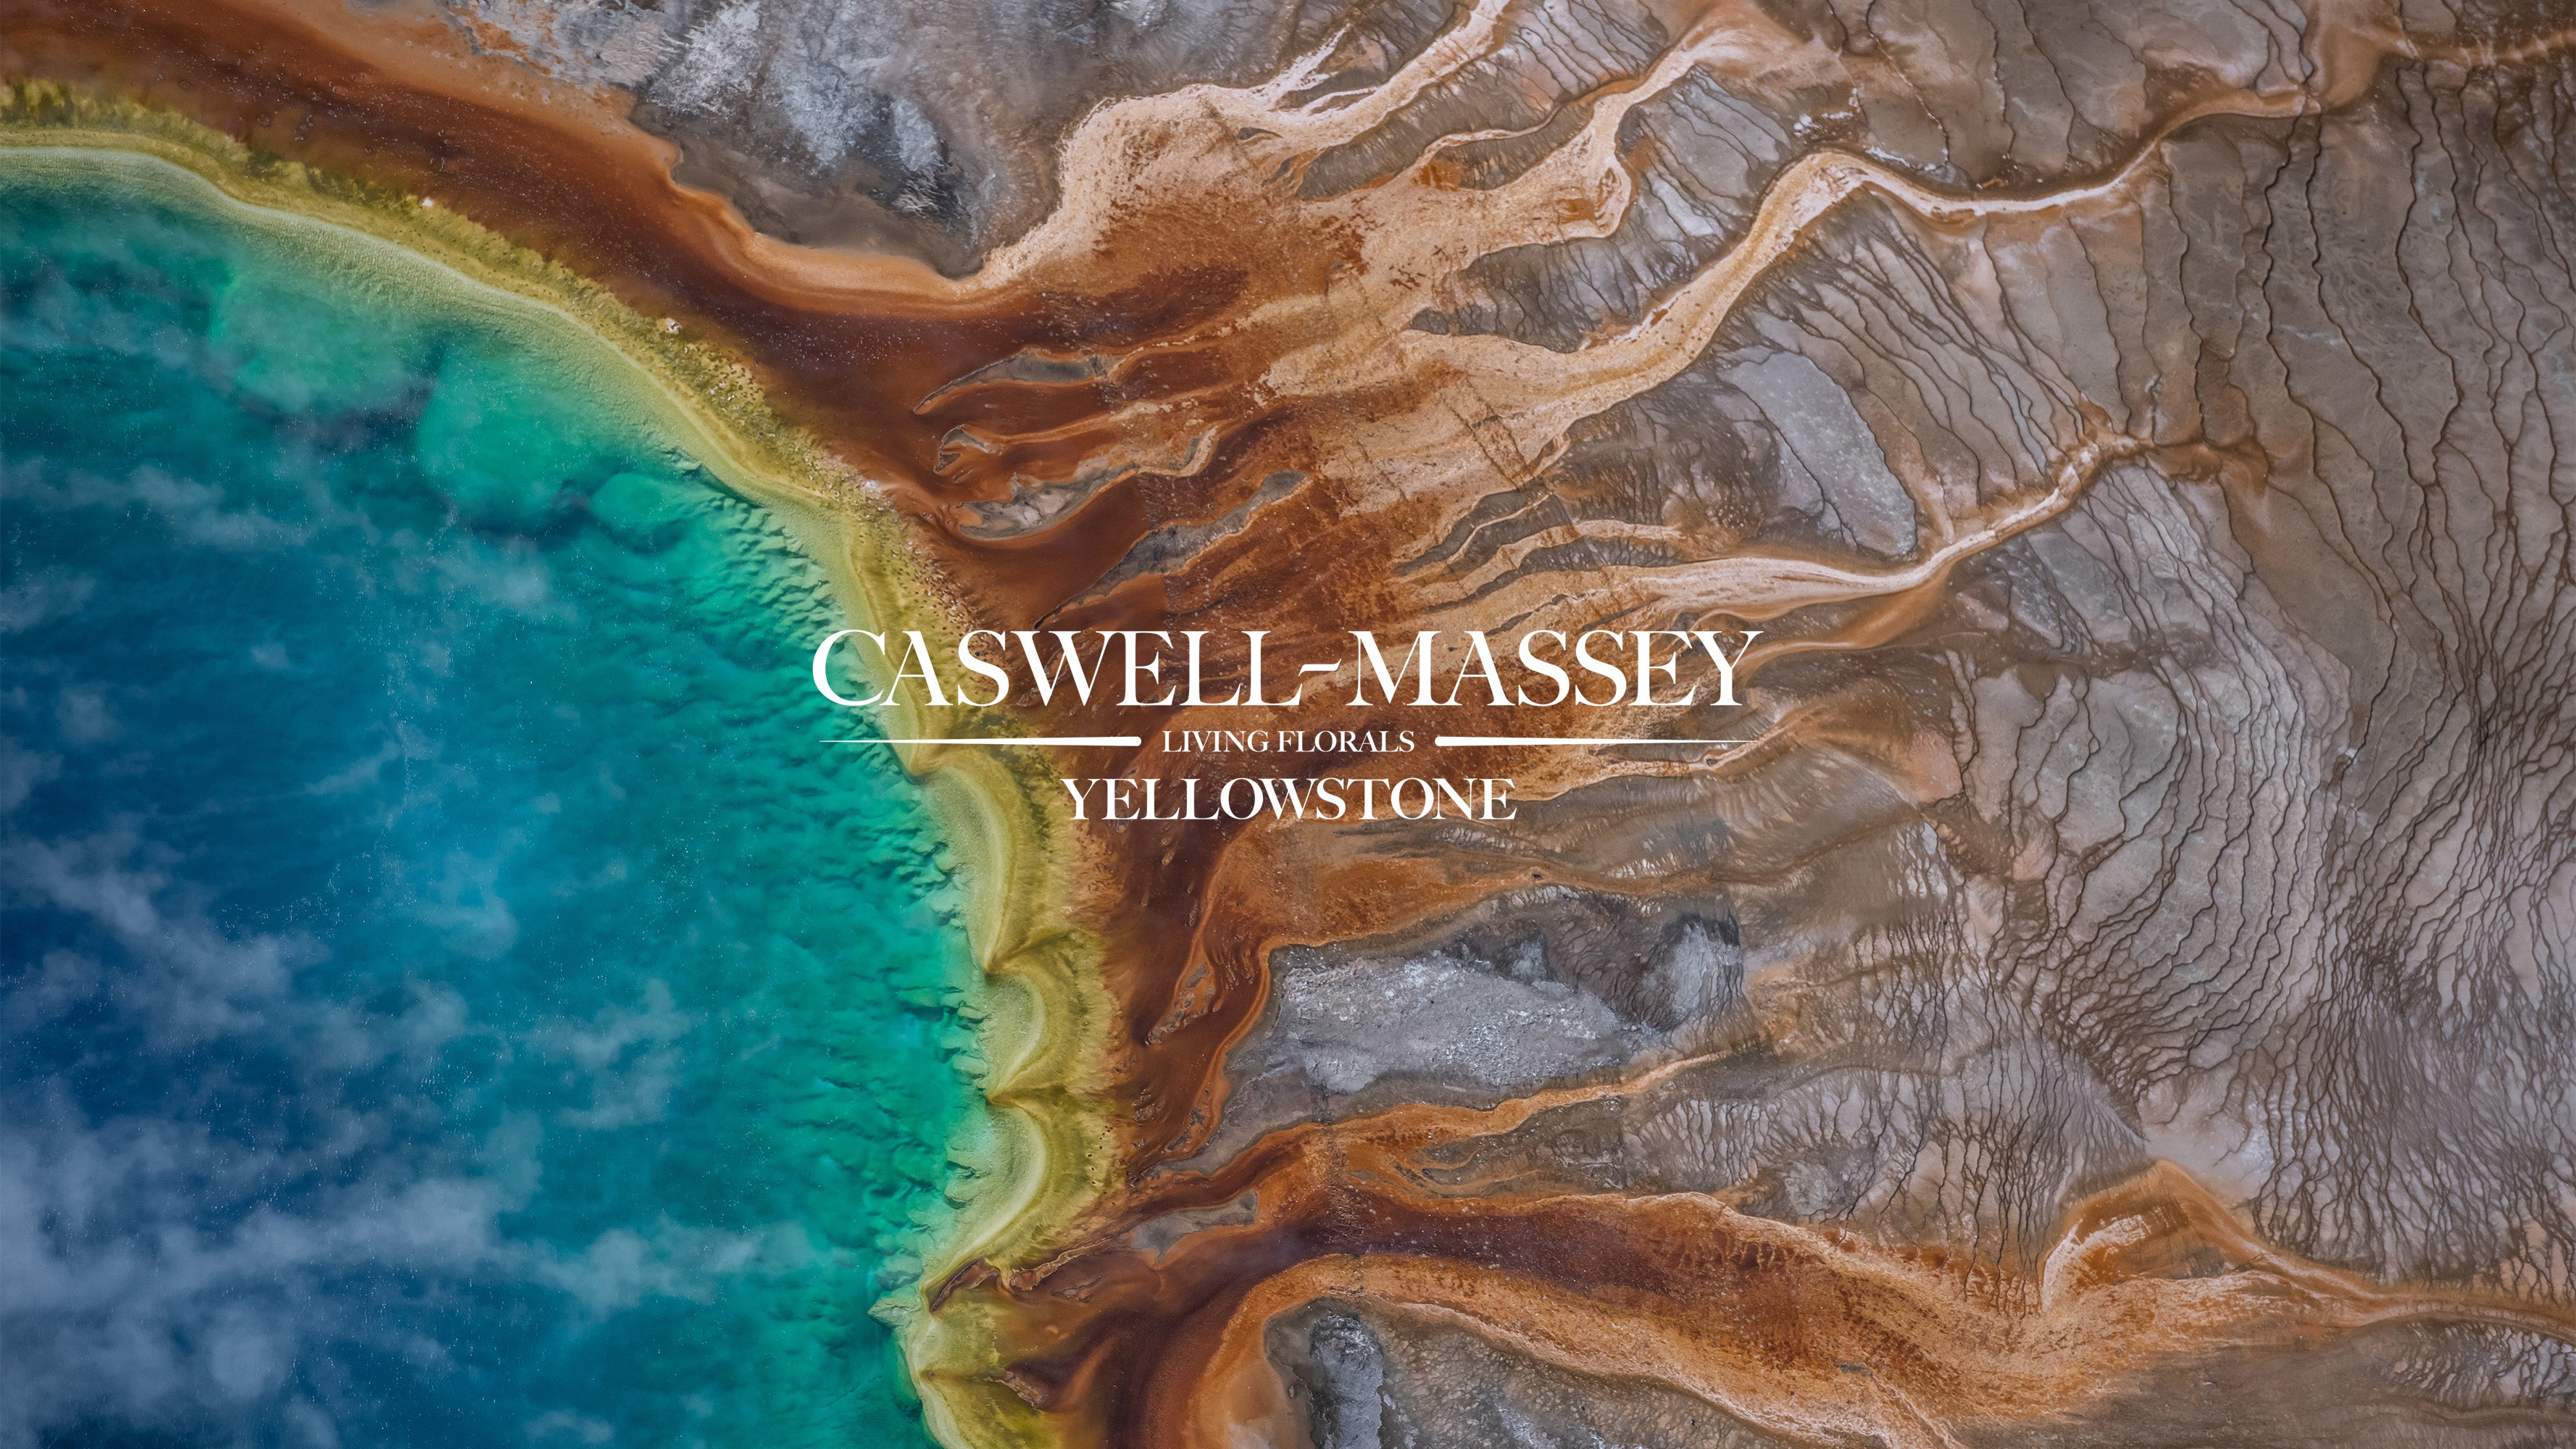 Caswell-Massey Yellowstone Collection: bird's eye photo taken of Yellowstone Lake